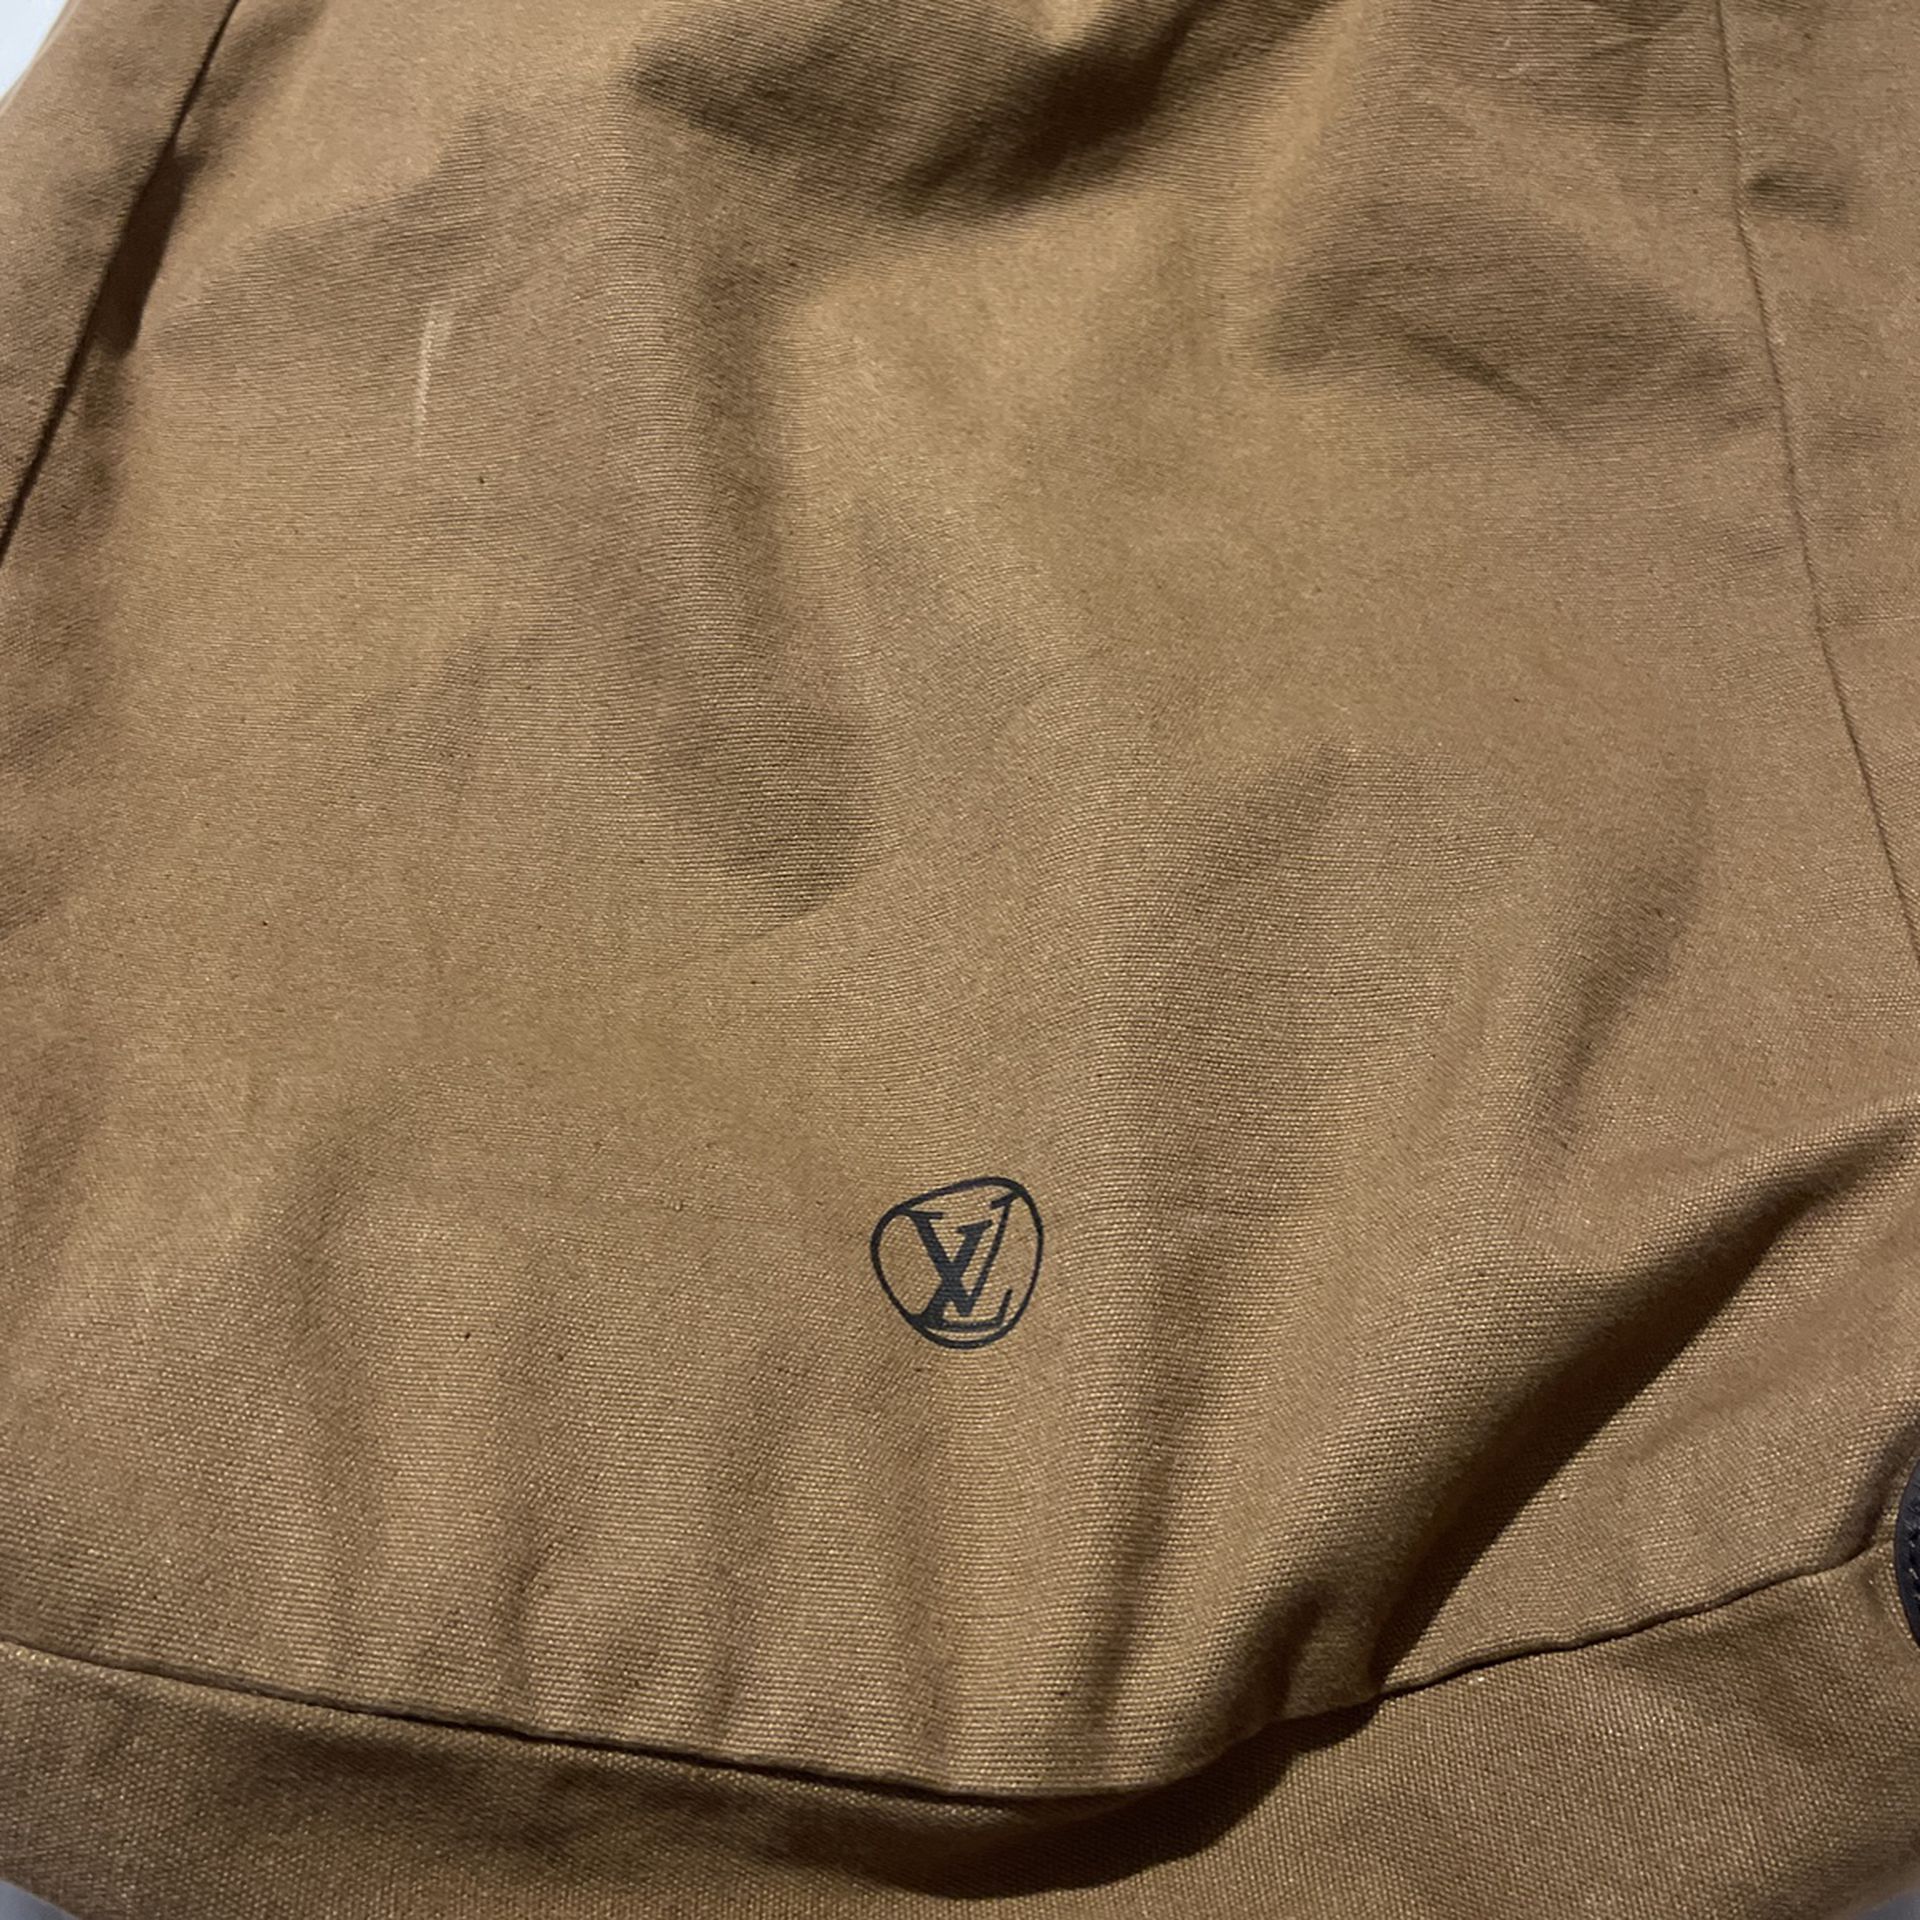 Louis Vuitton Limited Edition Christian Louboutin Shopping Bag Like New, CashCo Pawn, San Diego